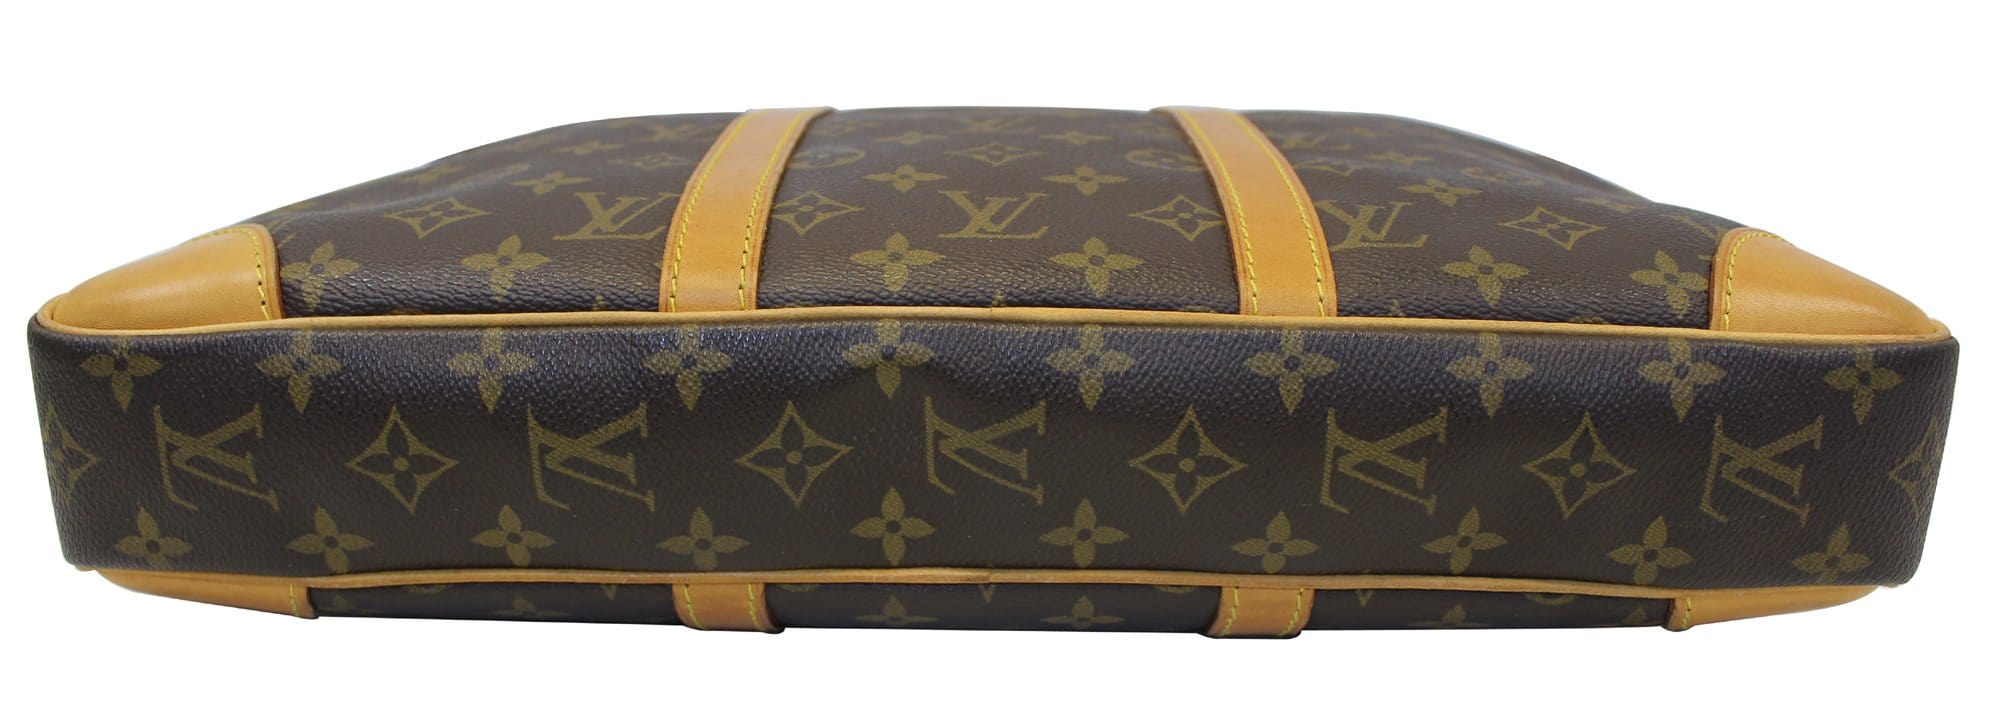 Louis Vuitton Voyage Briefcase 341677